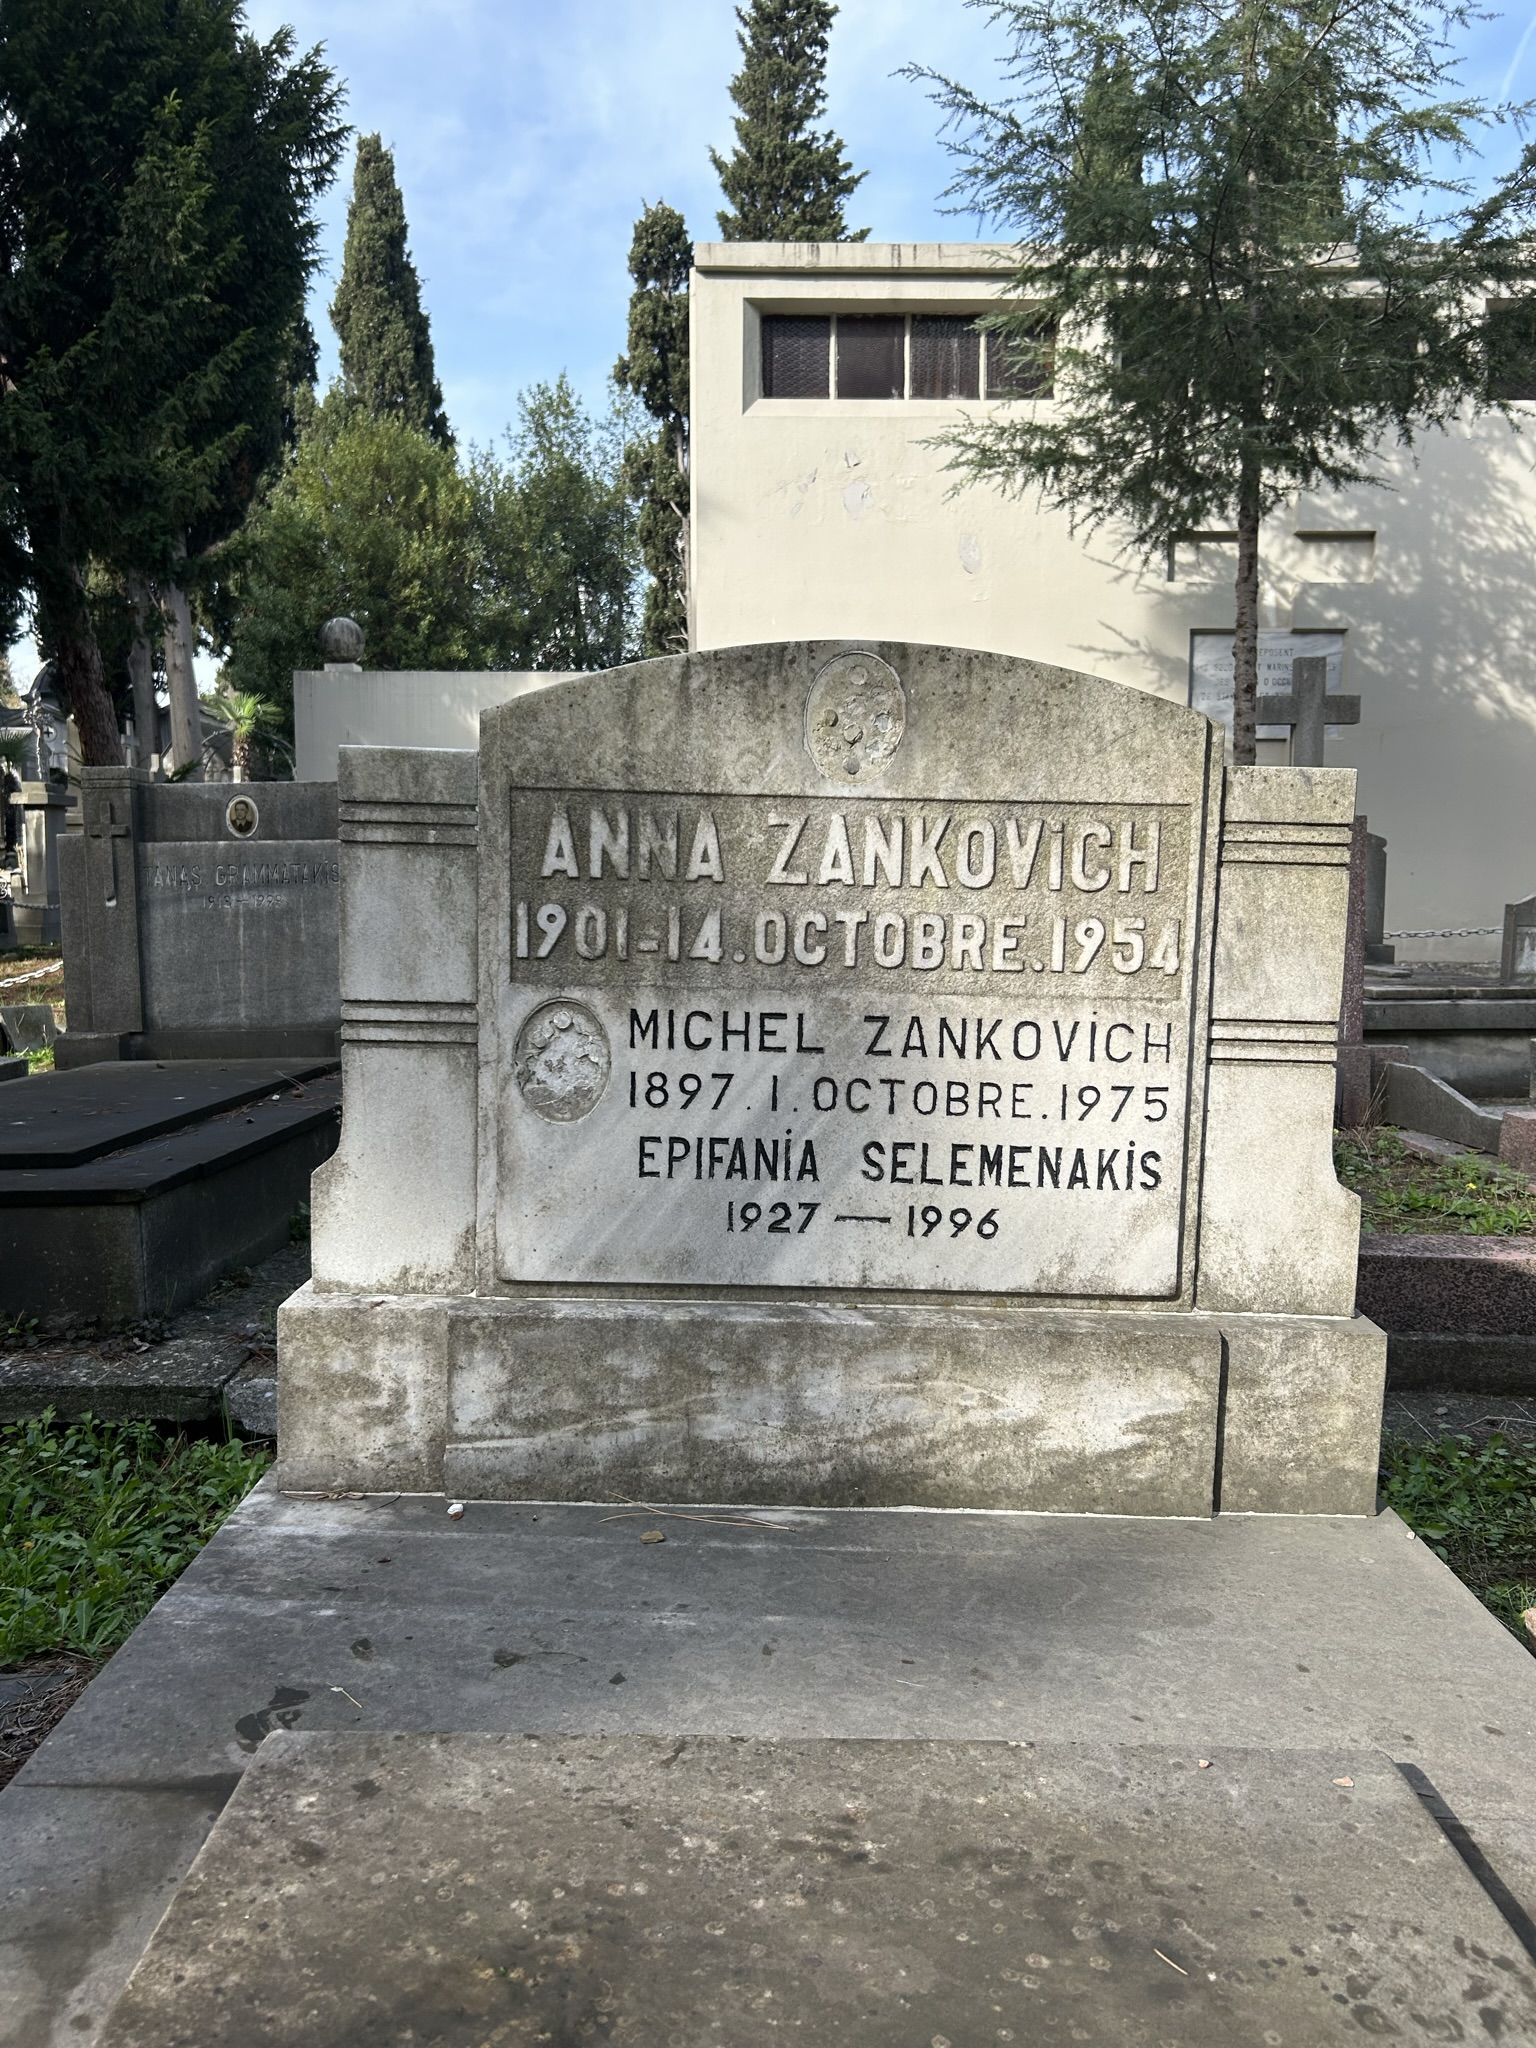 Inscription from the gravestone of Anna and Michel Zankovich, Epiphany Selemenakis, Catholic cemetery in Feriköy